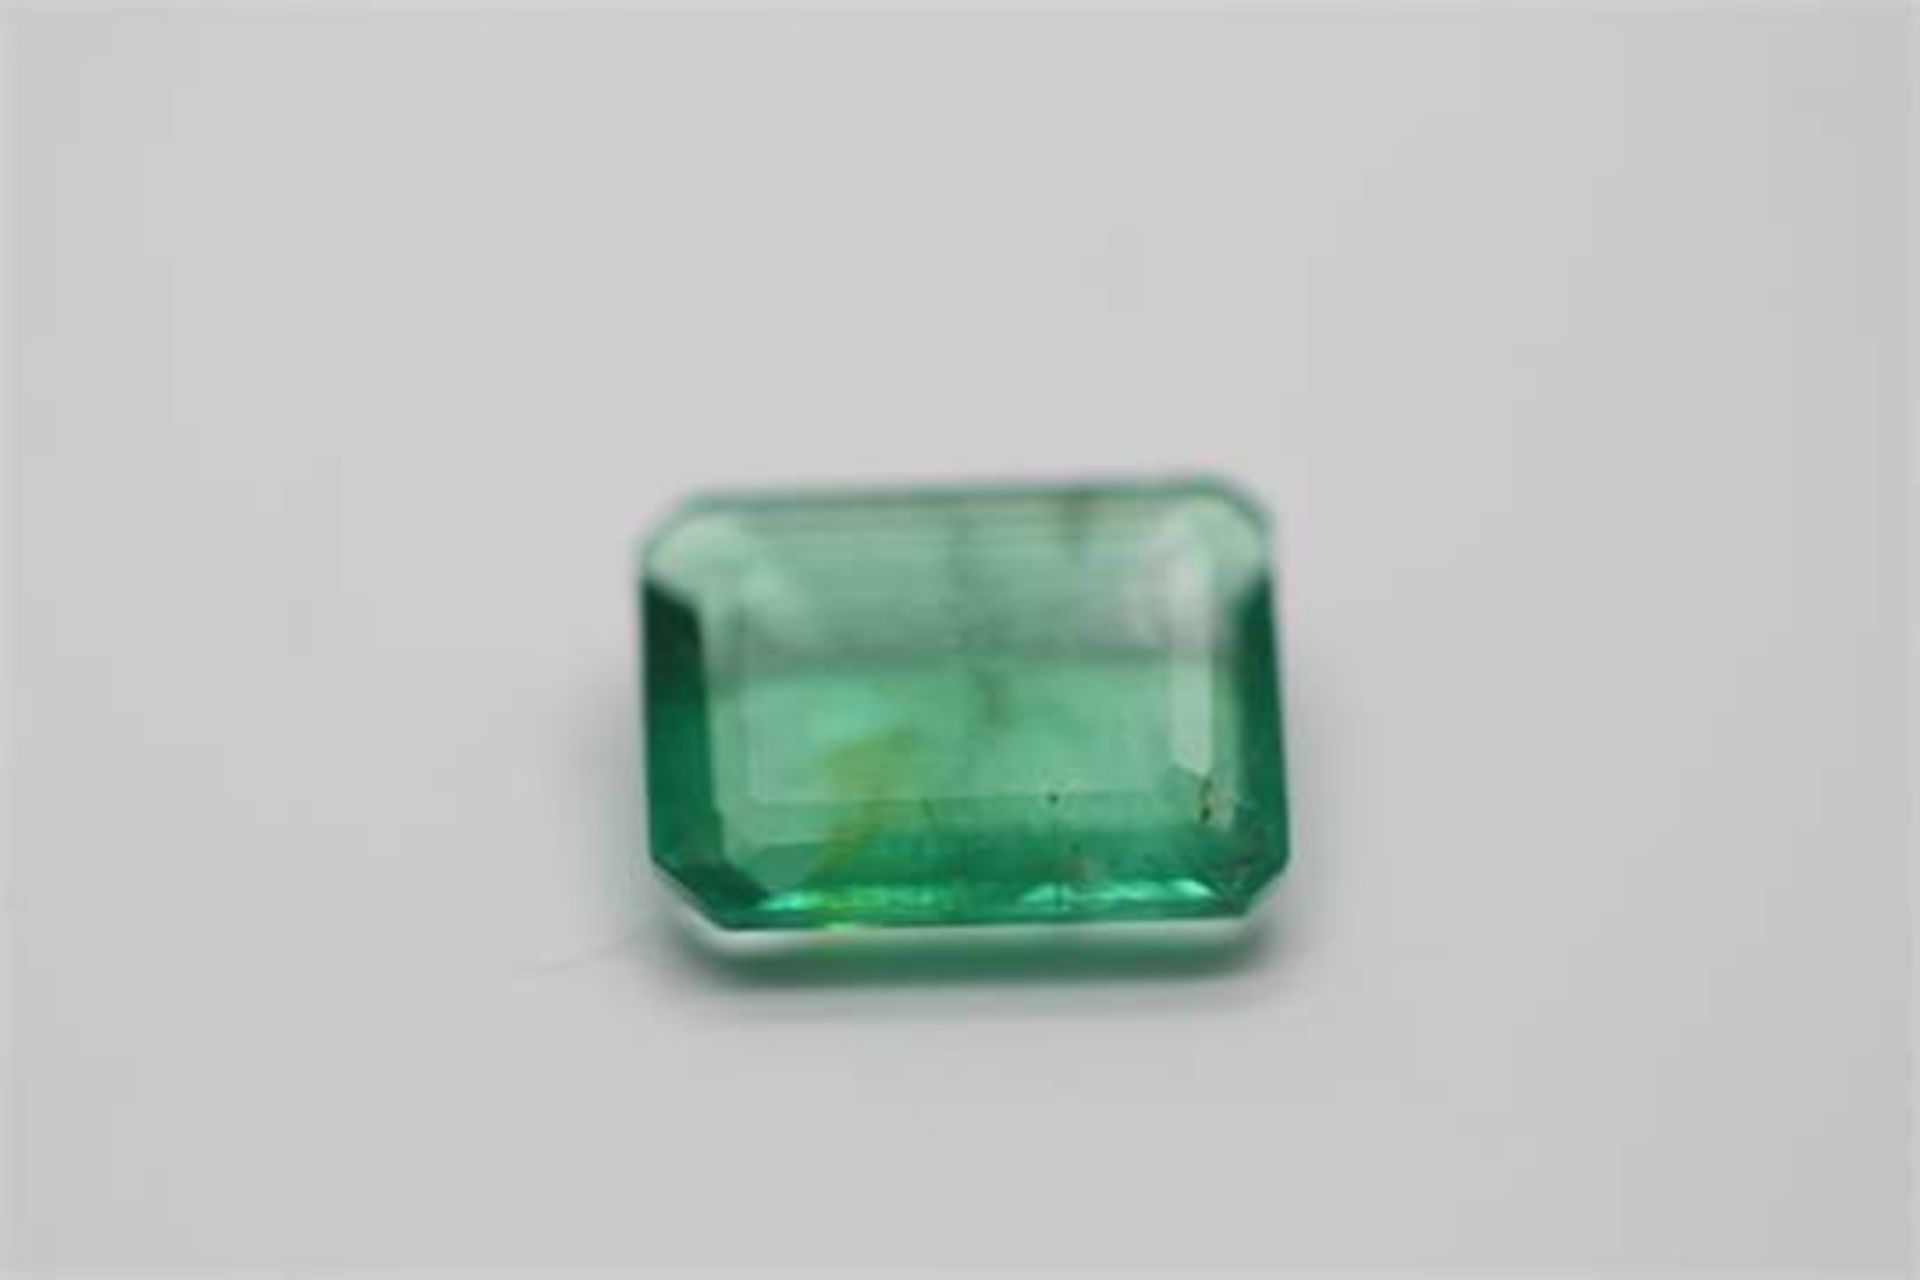 AGI Certified - 0.79 carat Natural Emerald - Emerald Cut.